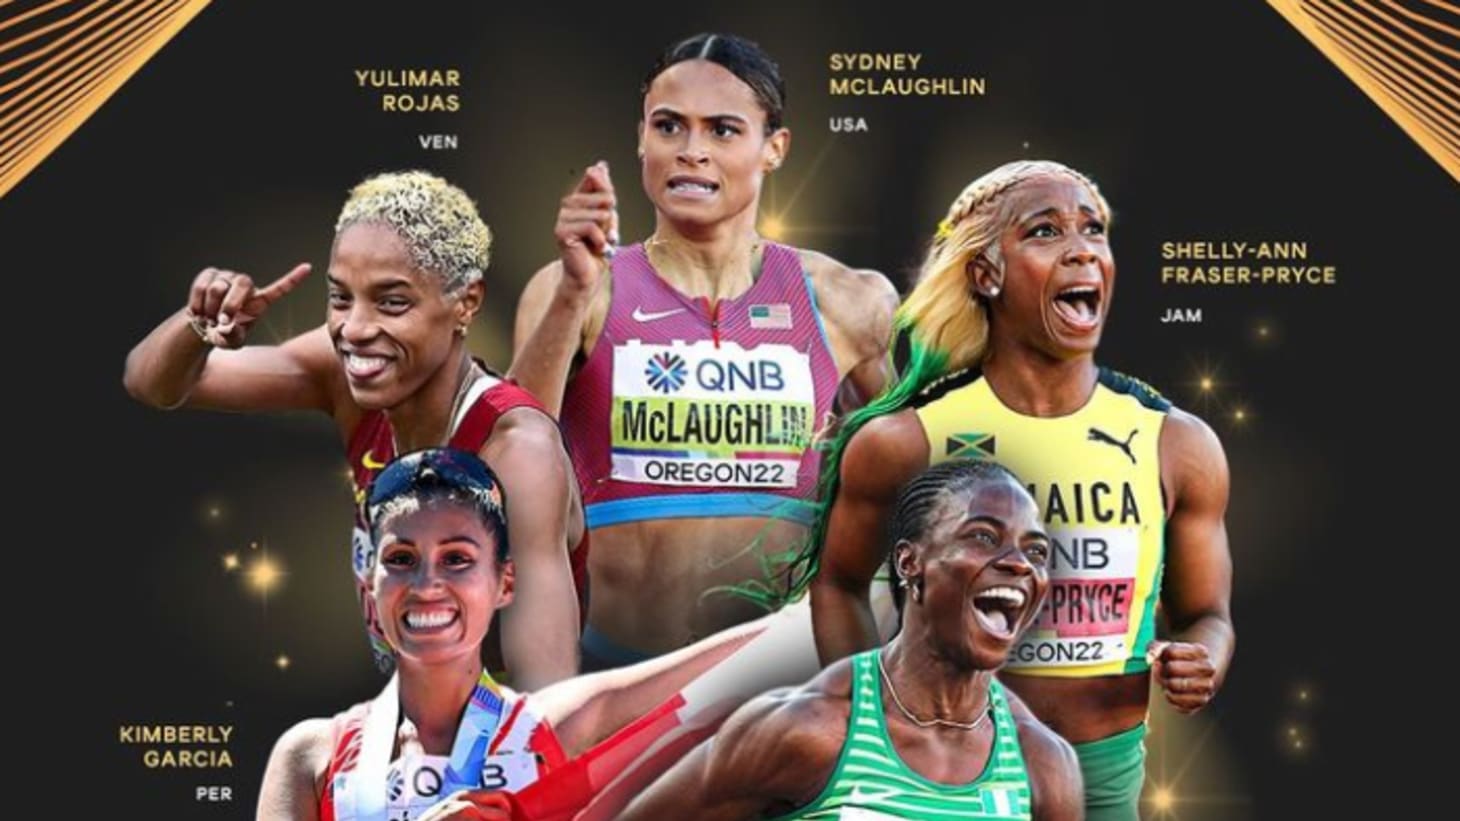 World Athletics announces Female Athlete of the Year nominees - NBC Sports